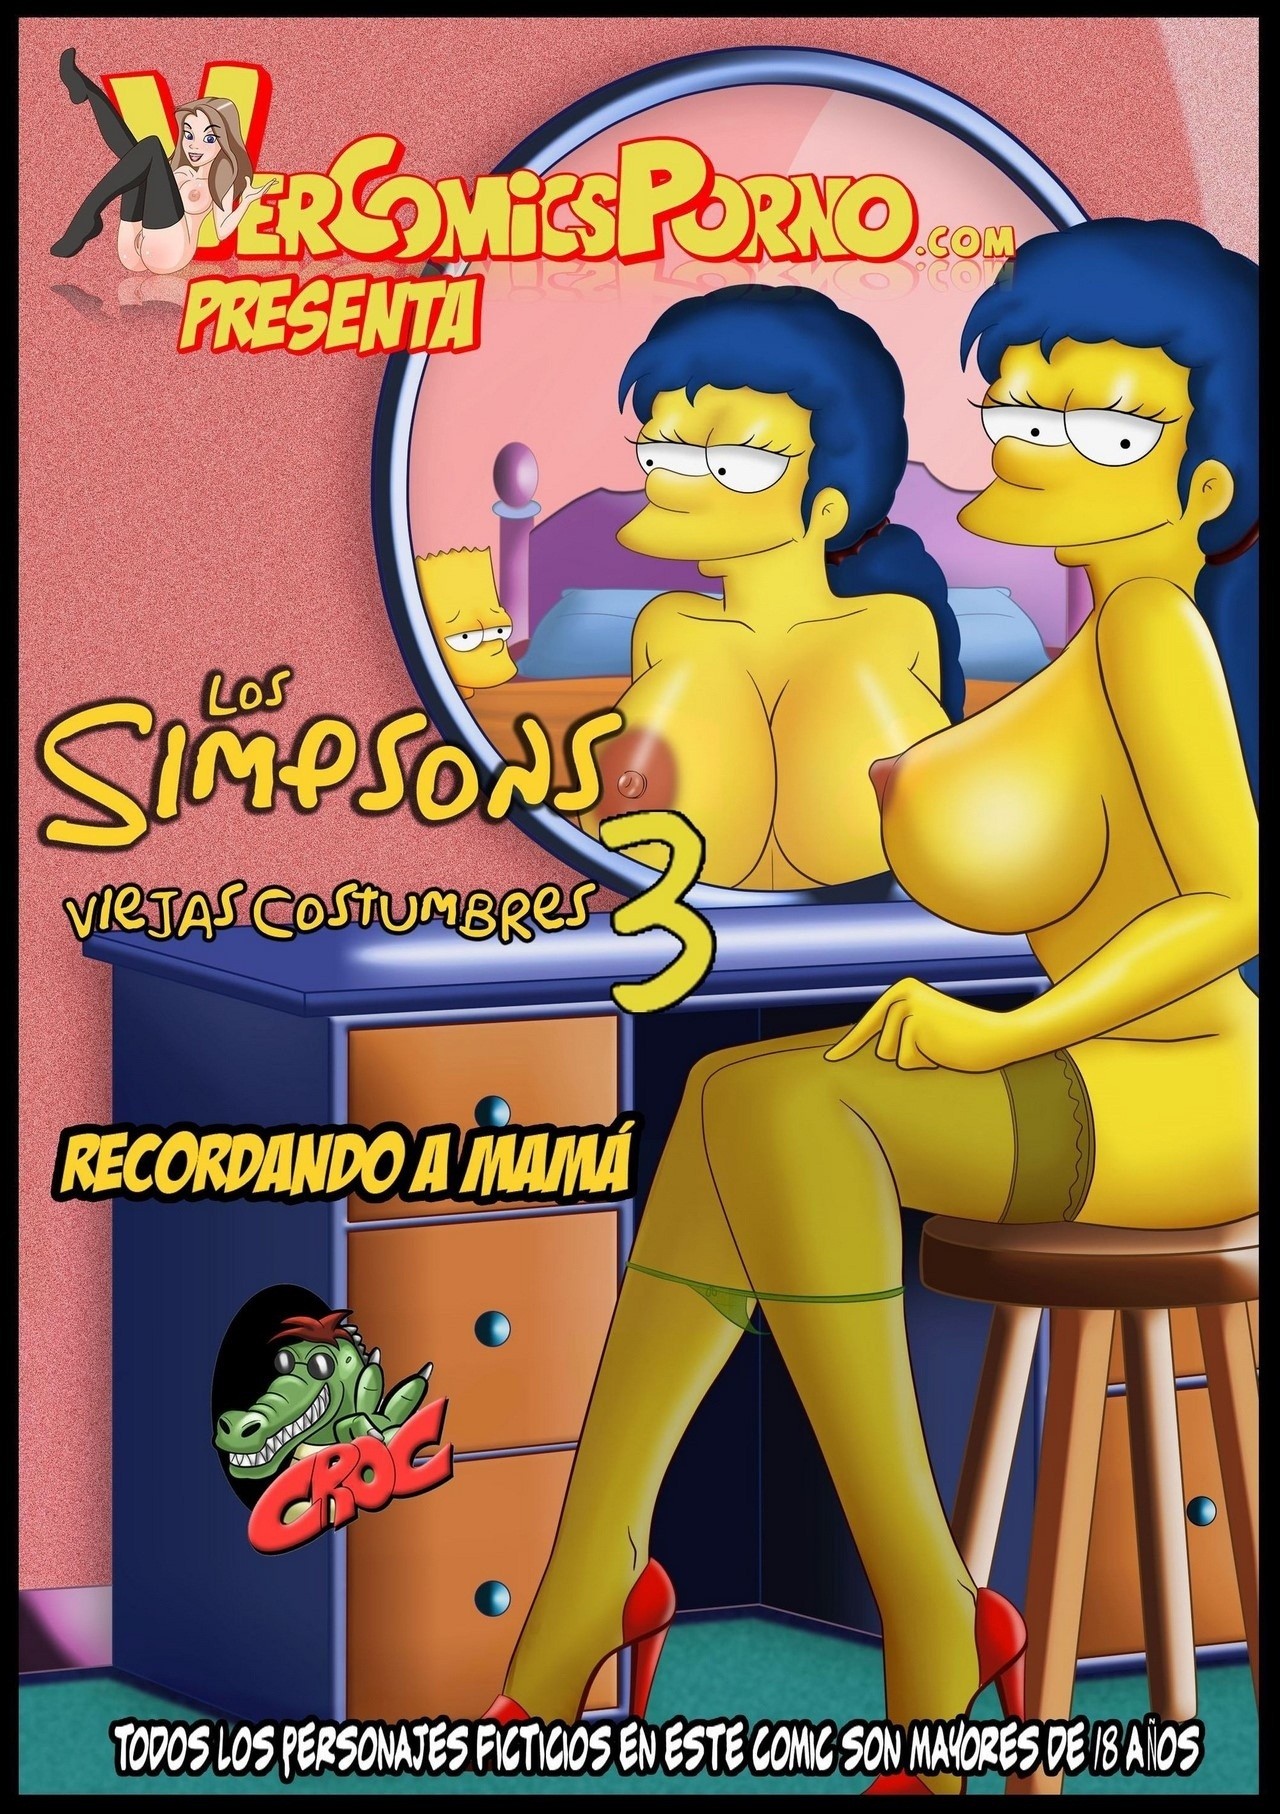 VerComicsPorno - Los Simpsons 3 COMIC